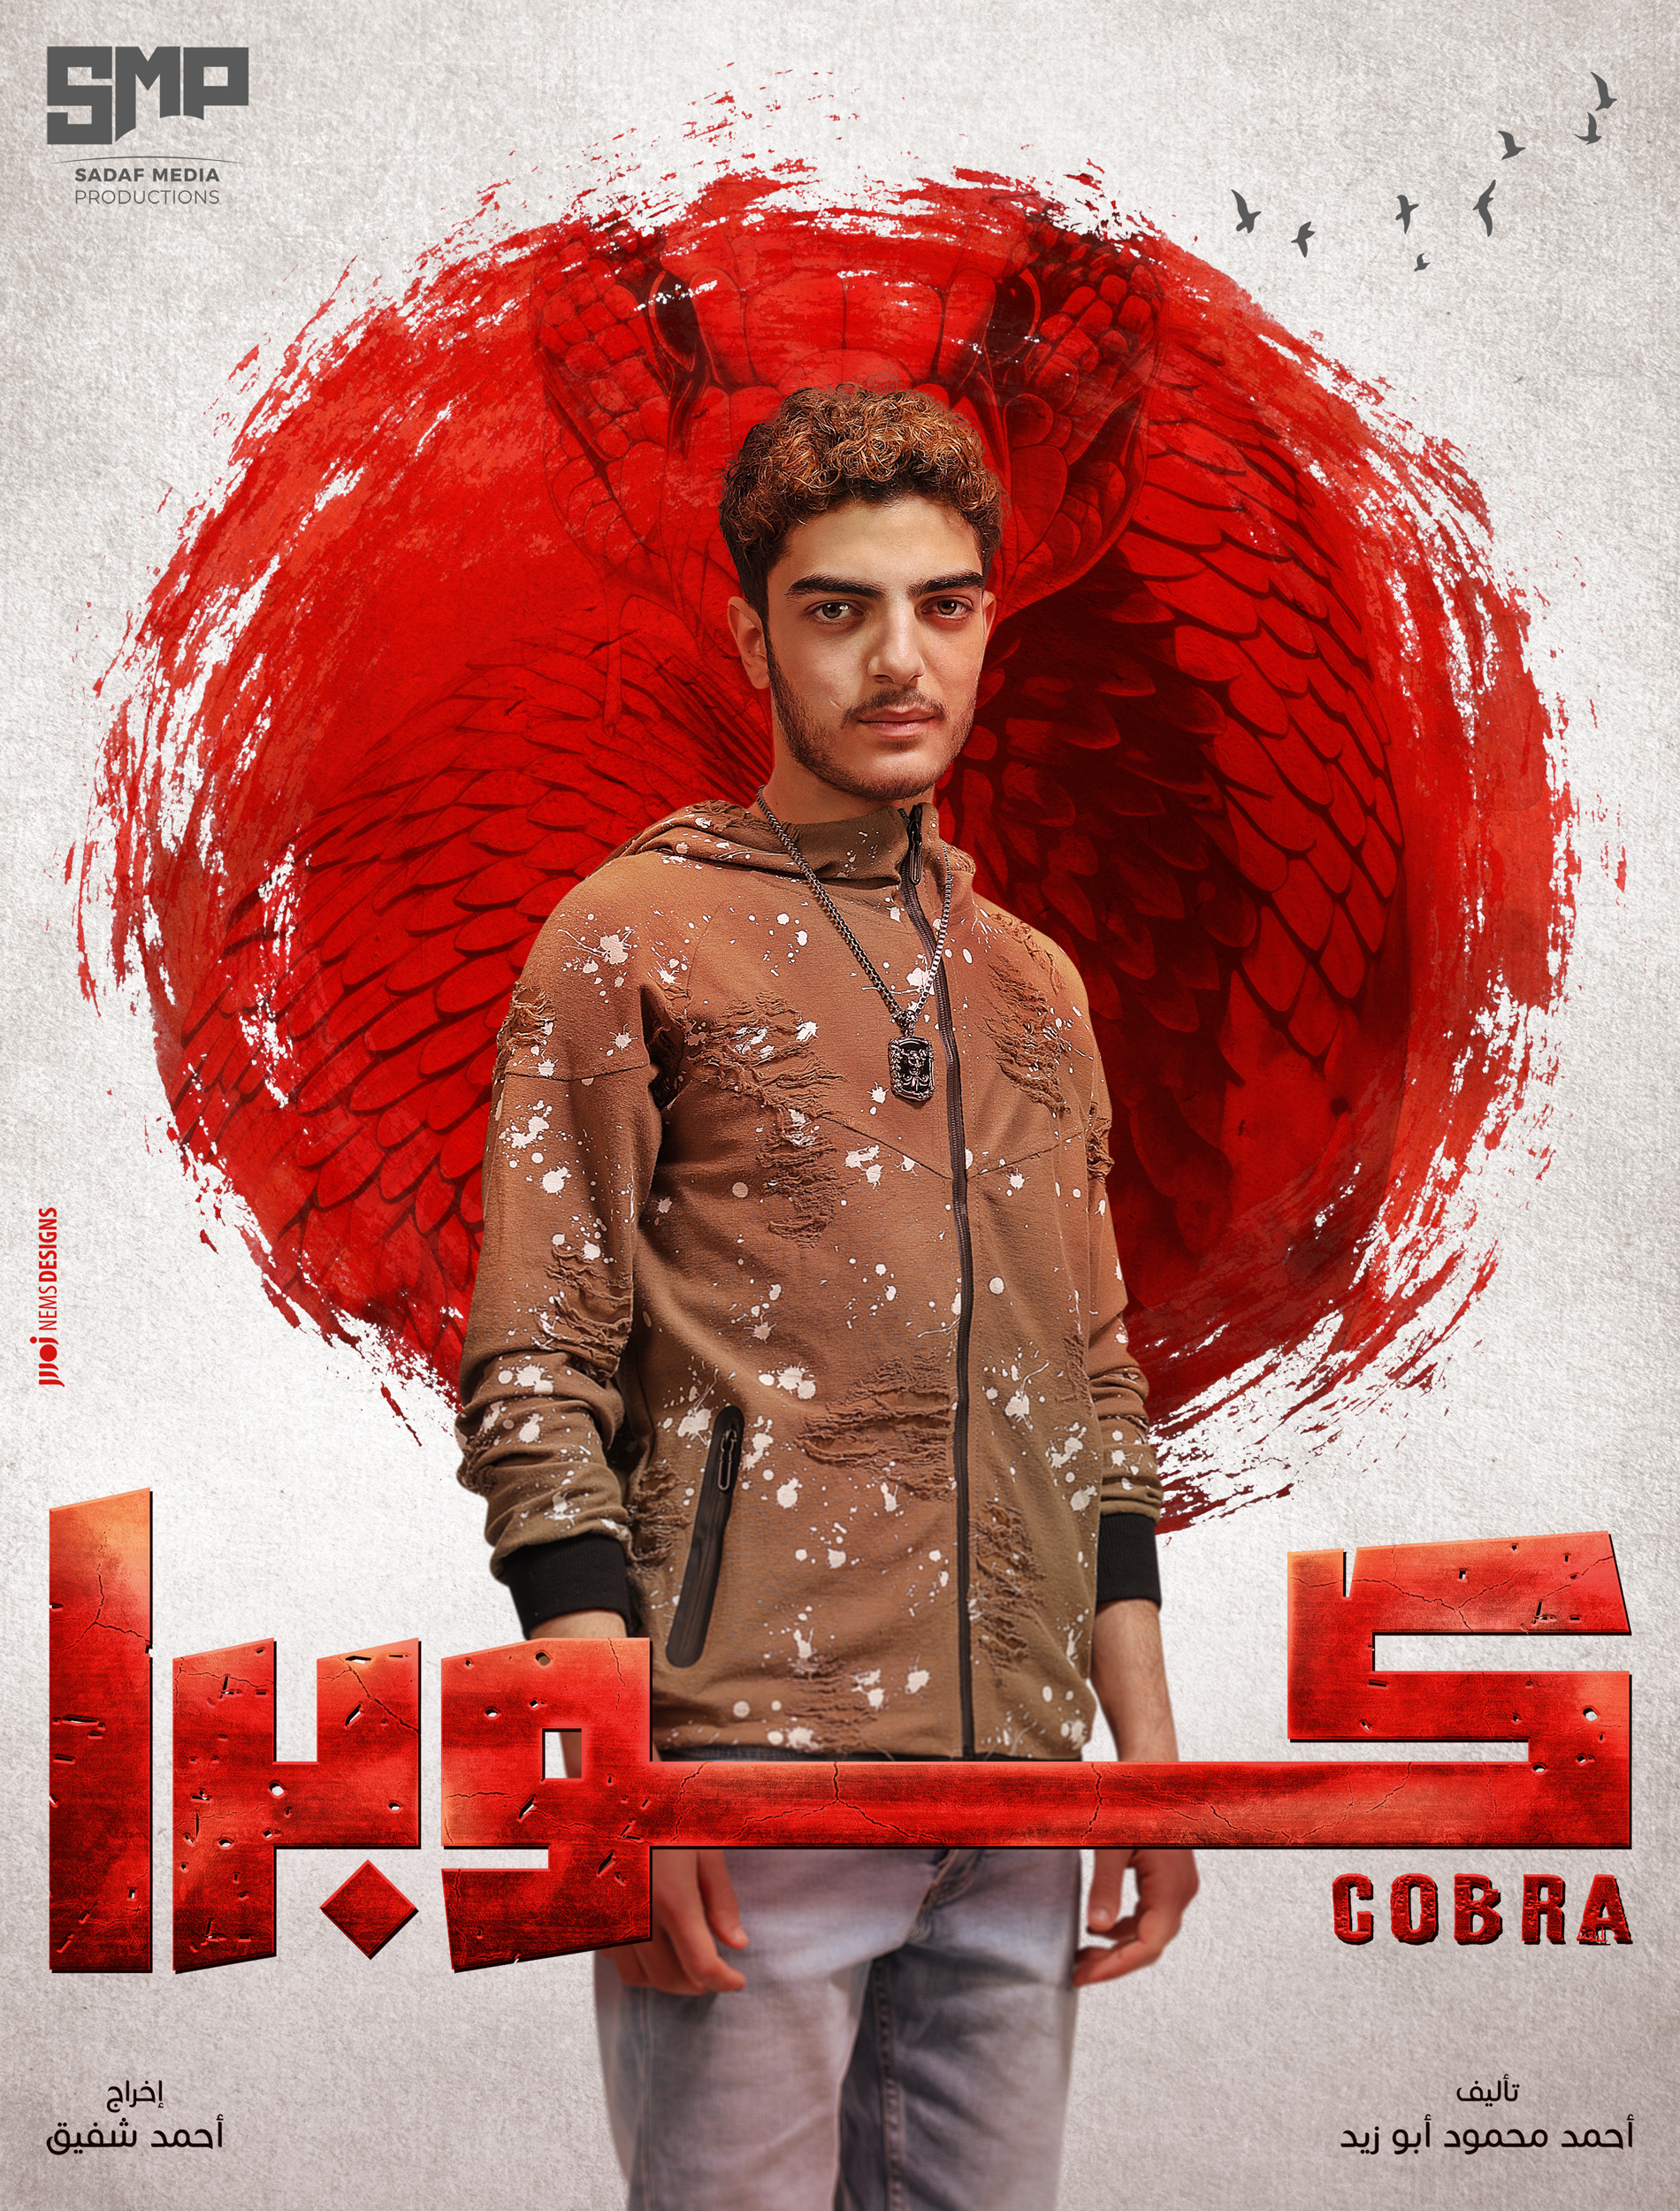 Mega Sized TV Poster Image for Cobra (#15 of 20)